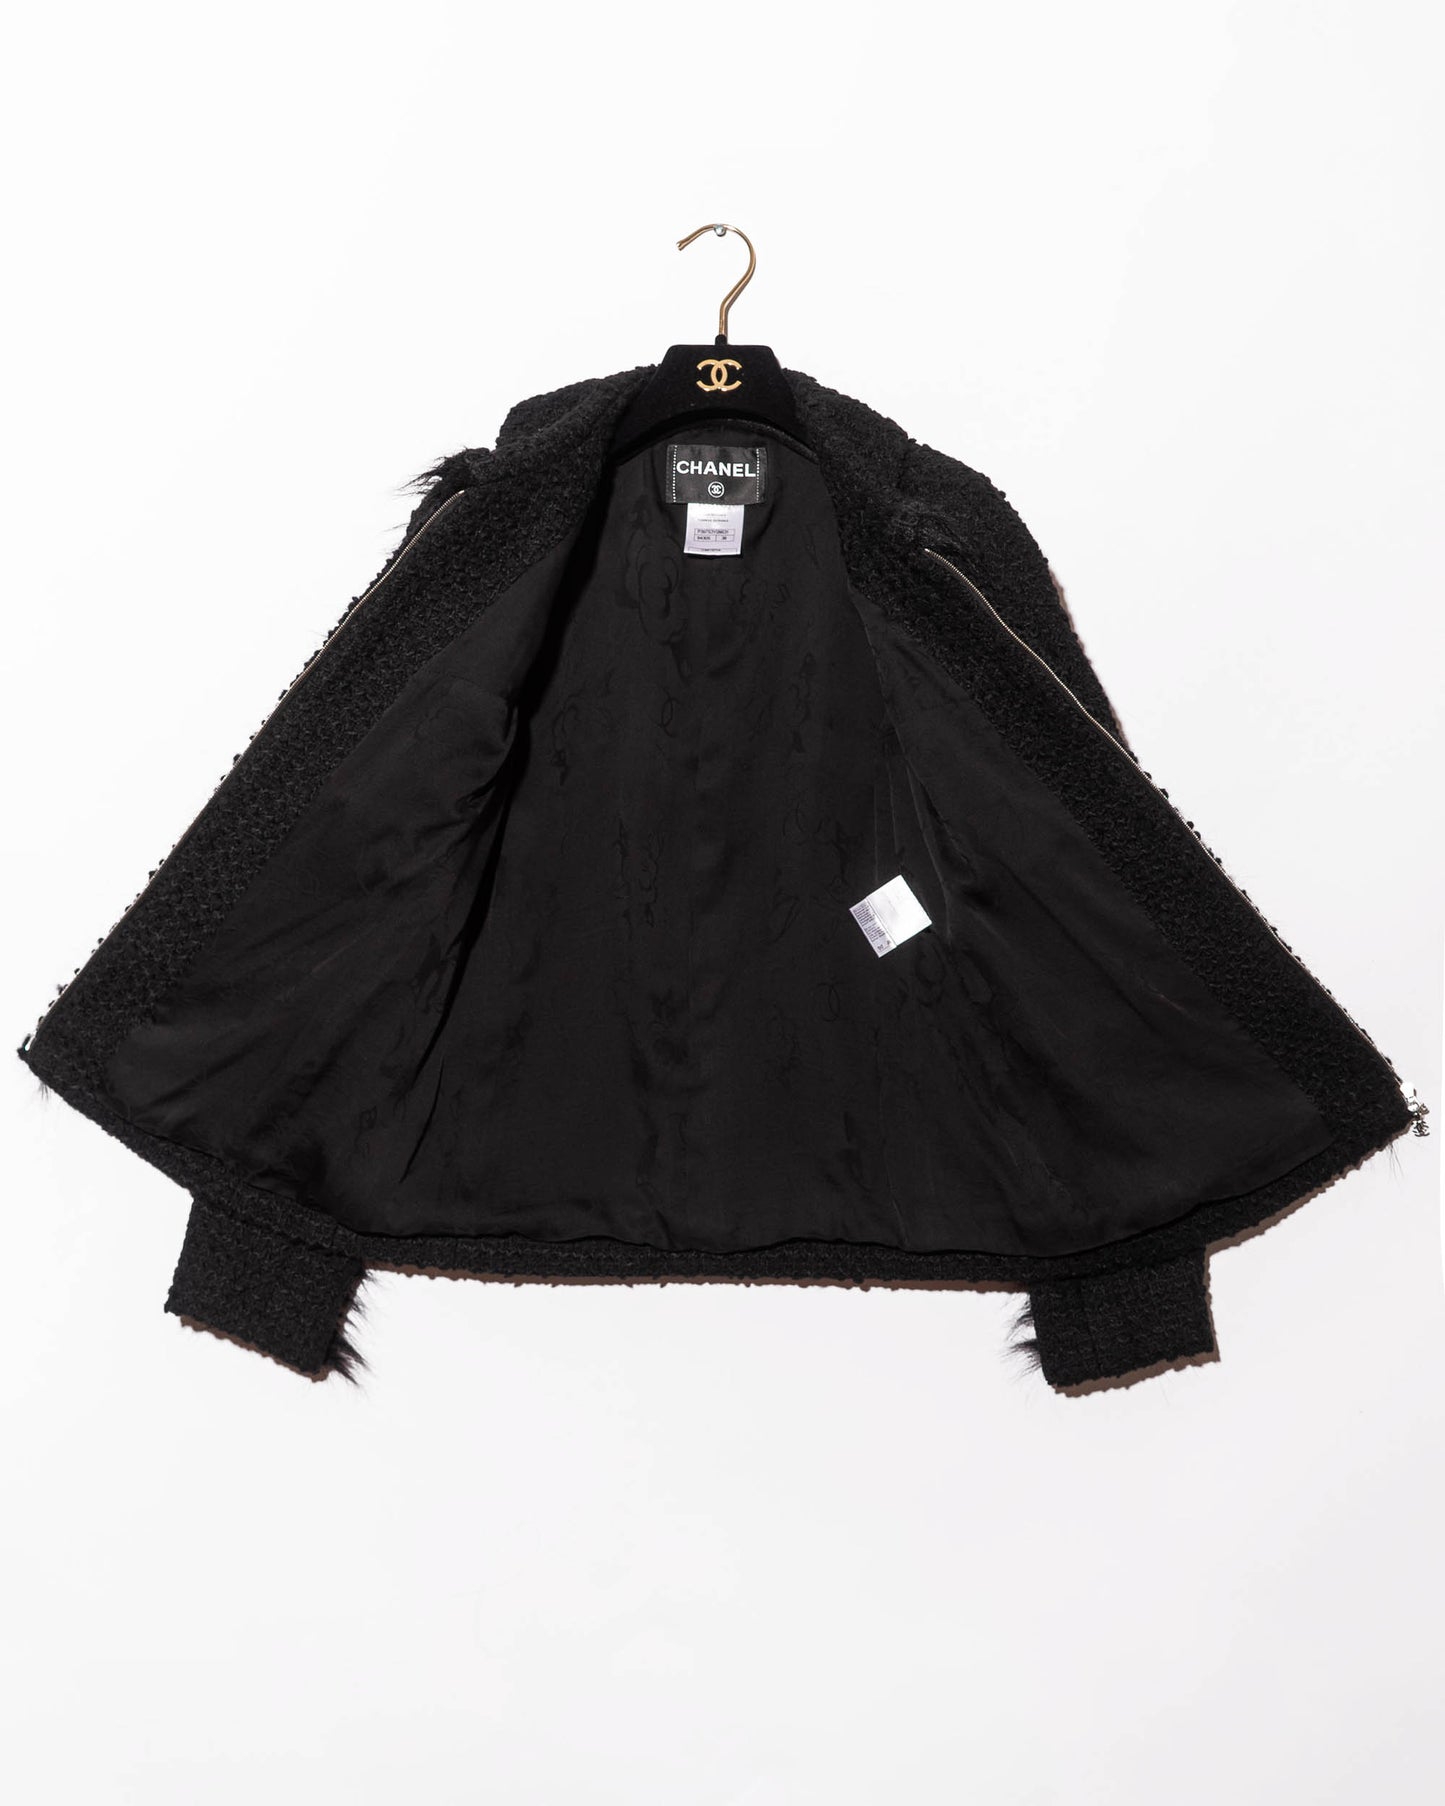 FR36-38 Chanel Fall 2010 Four Pocket Faux Fur Trim Black Tweed Jacket